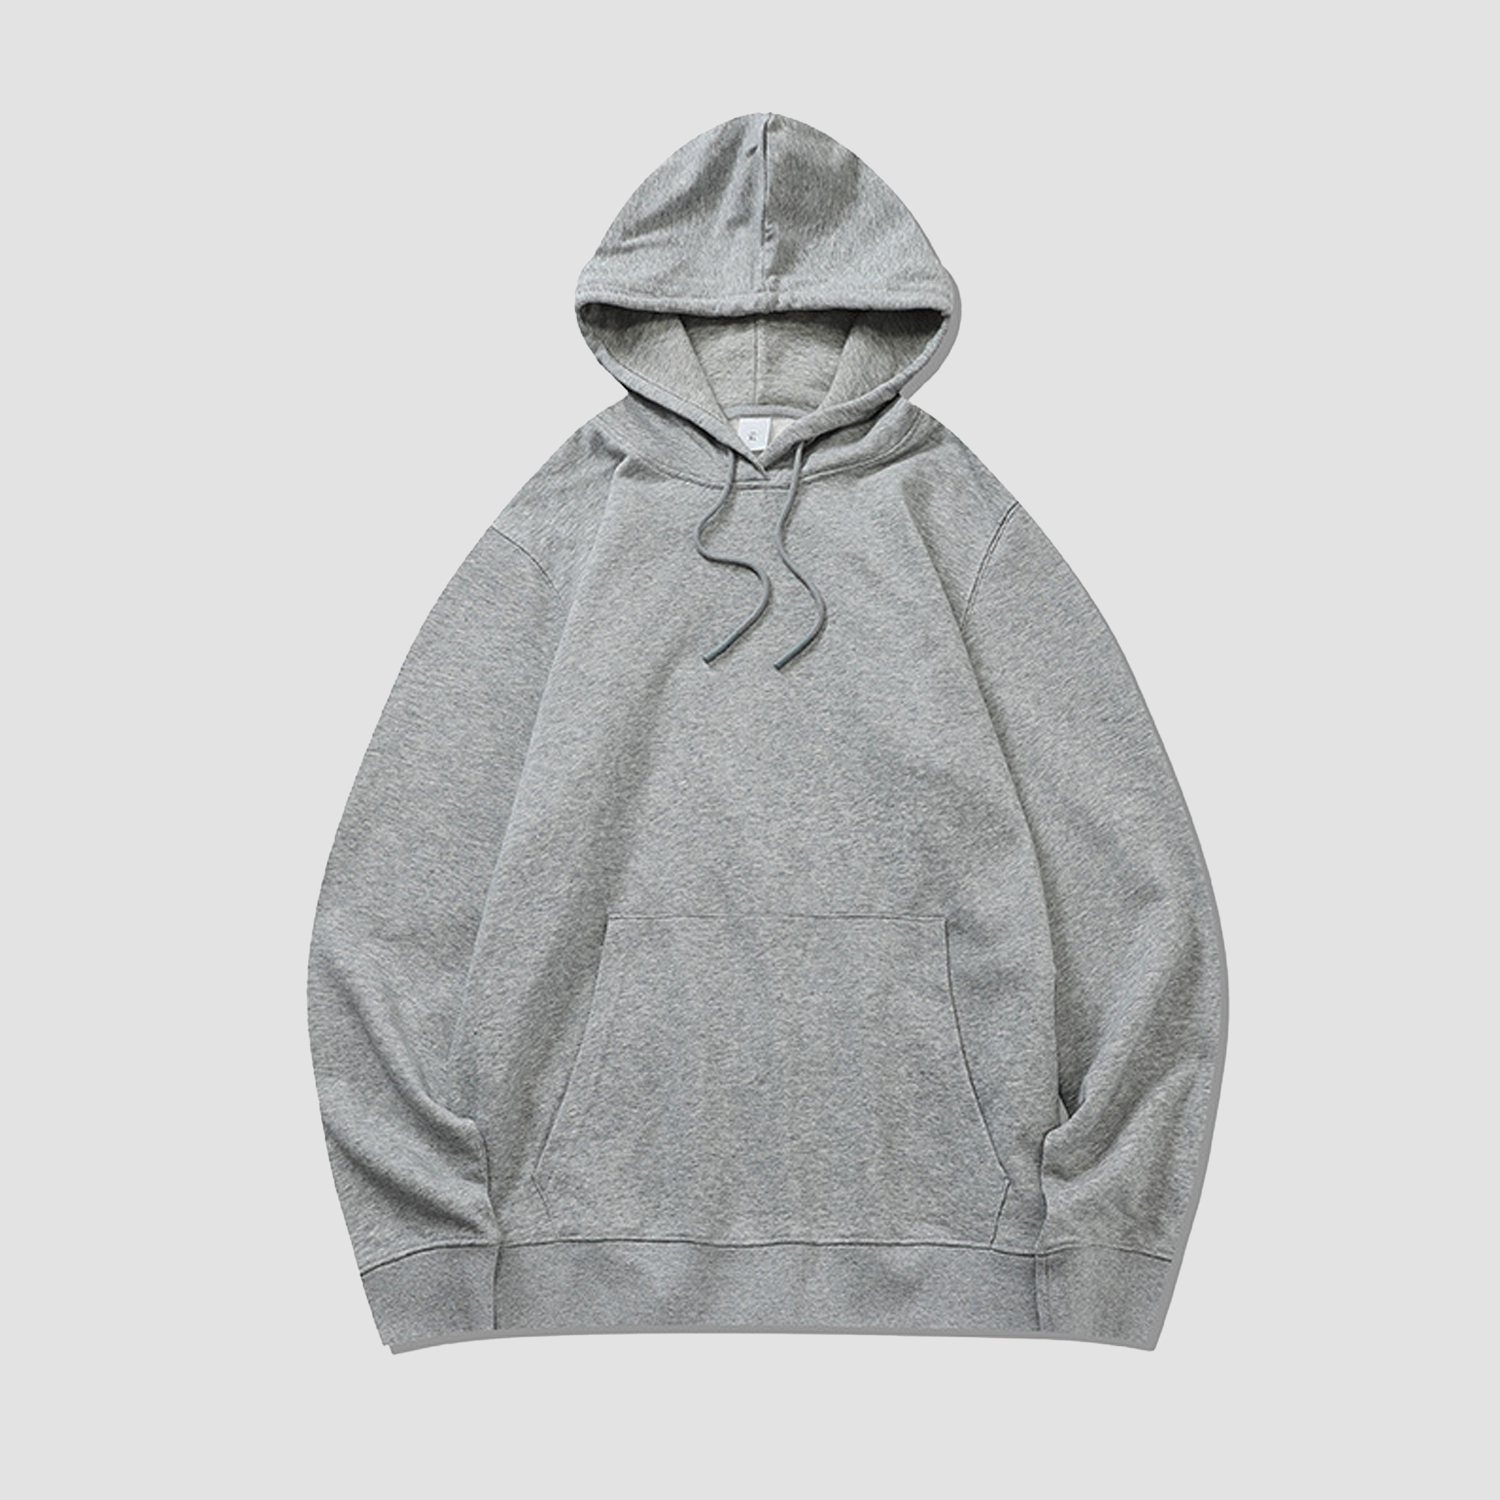 100 cotton hoodies wholesale